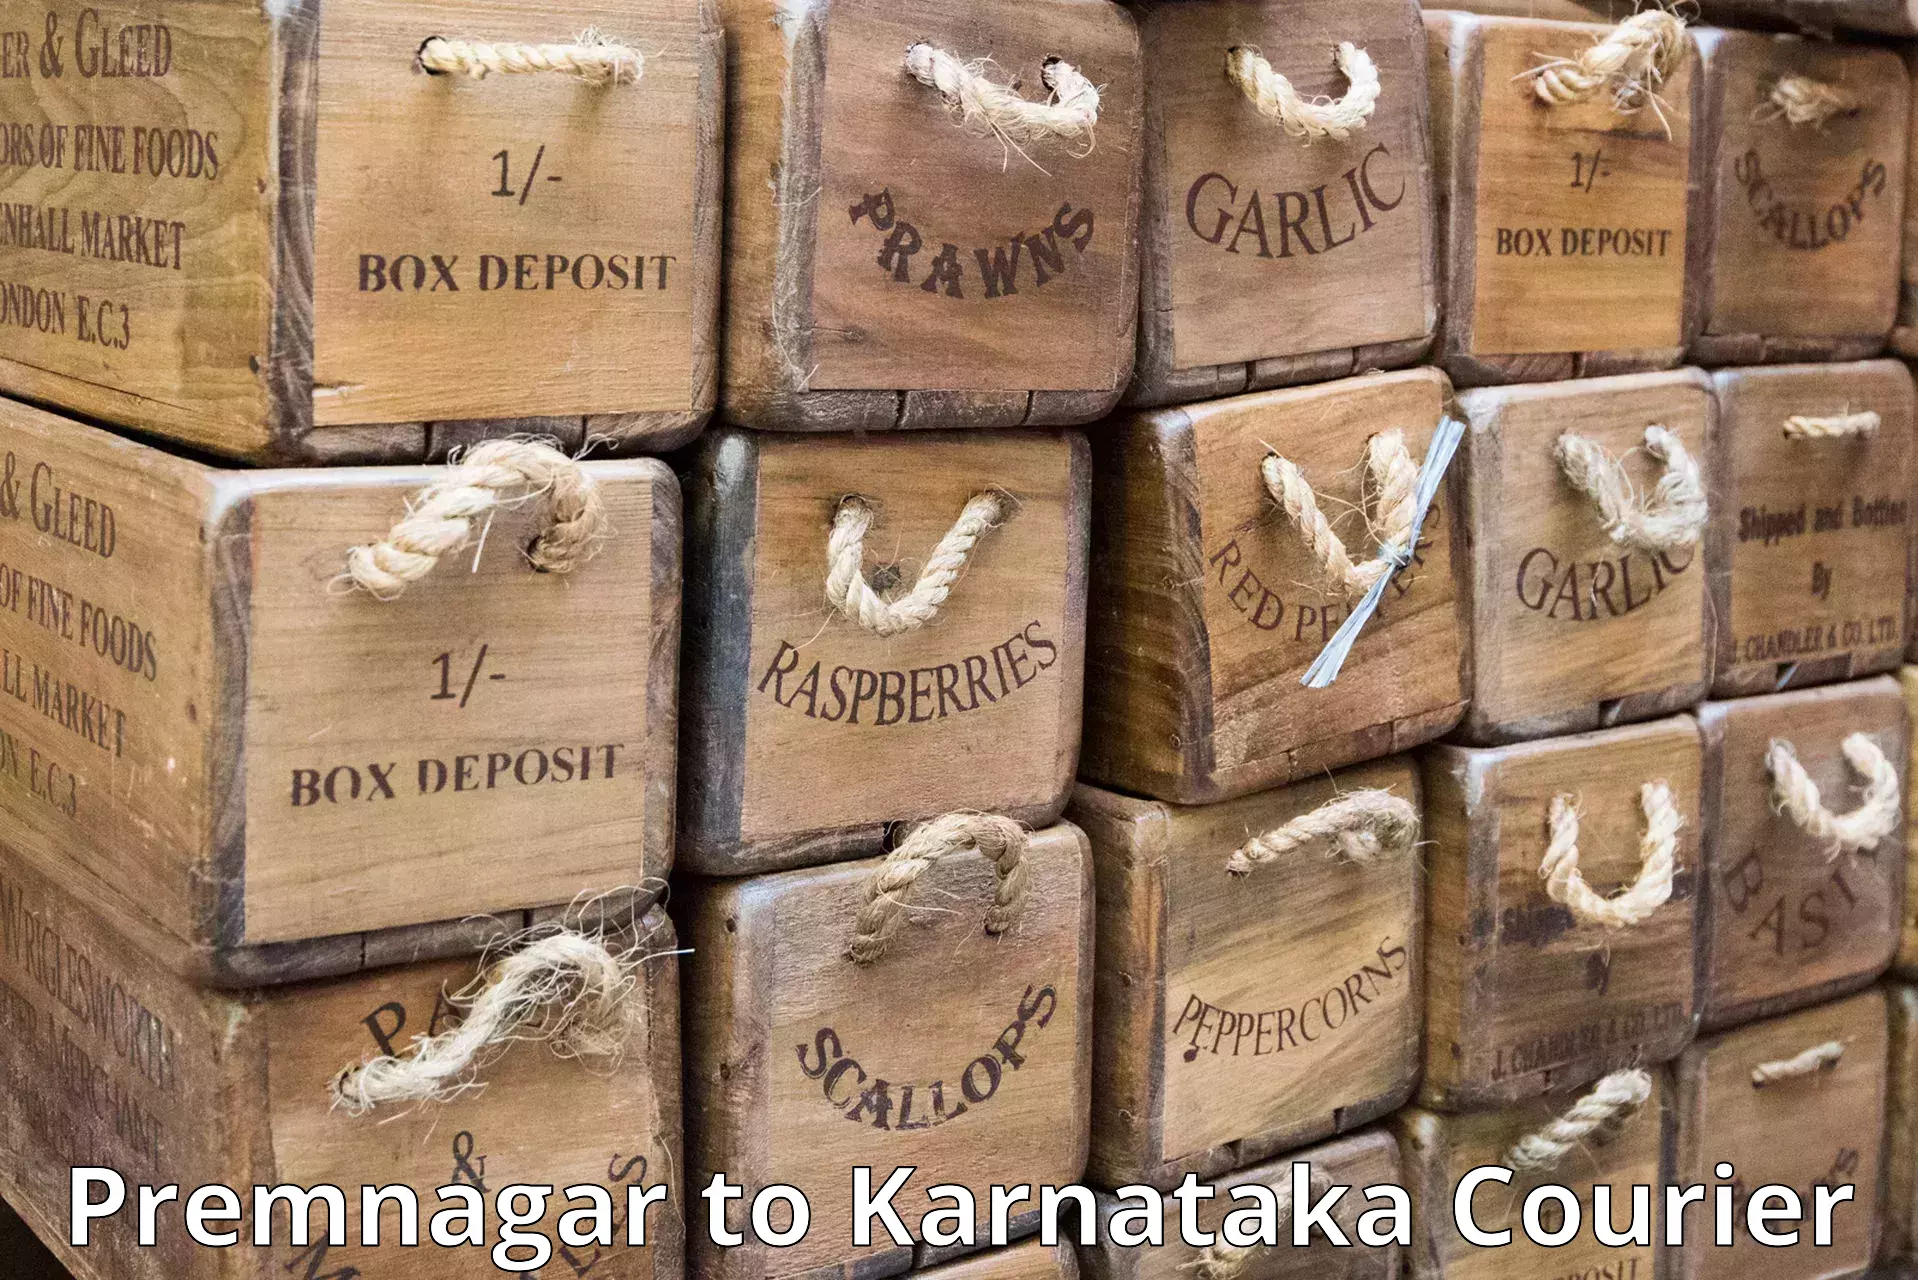 Global shipping networks Premnagar to Karnataka